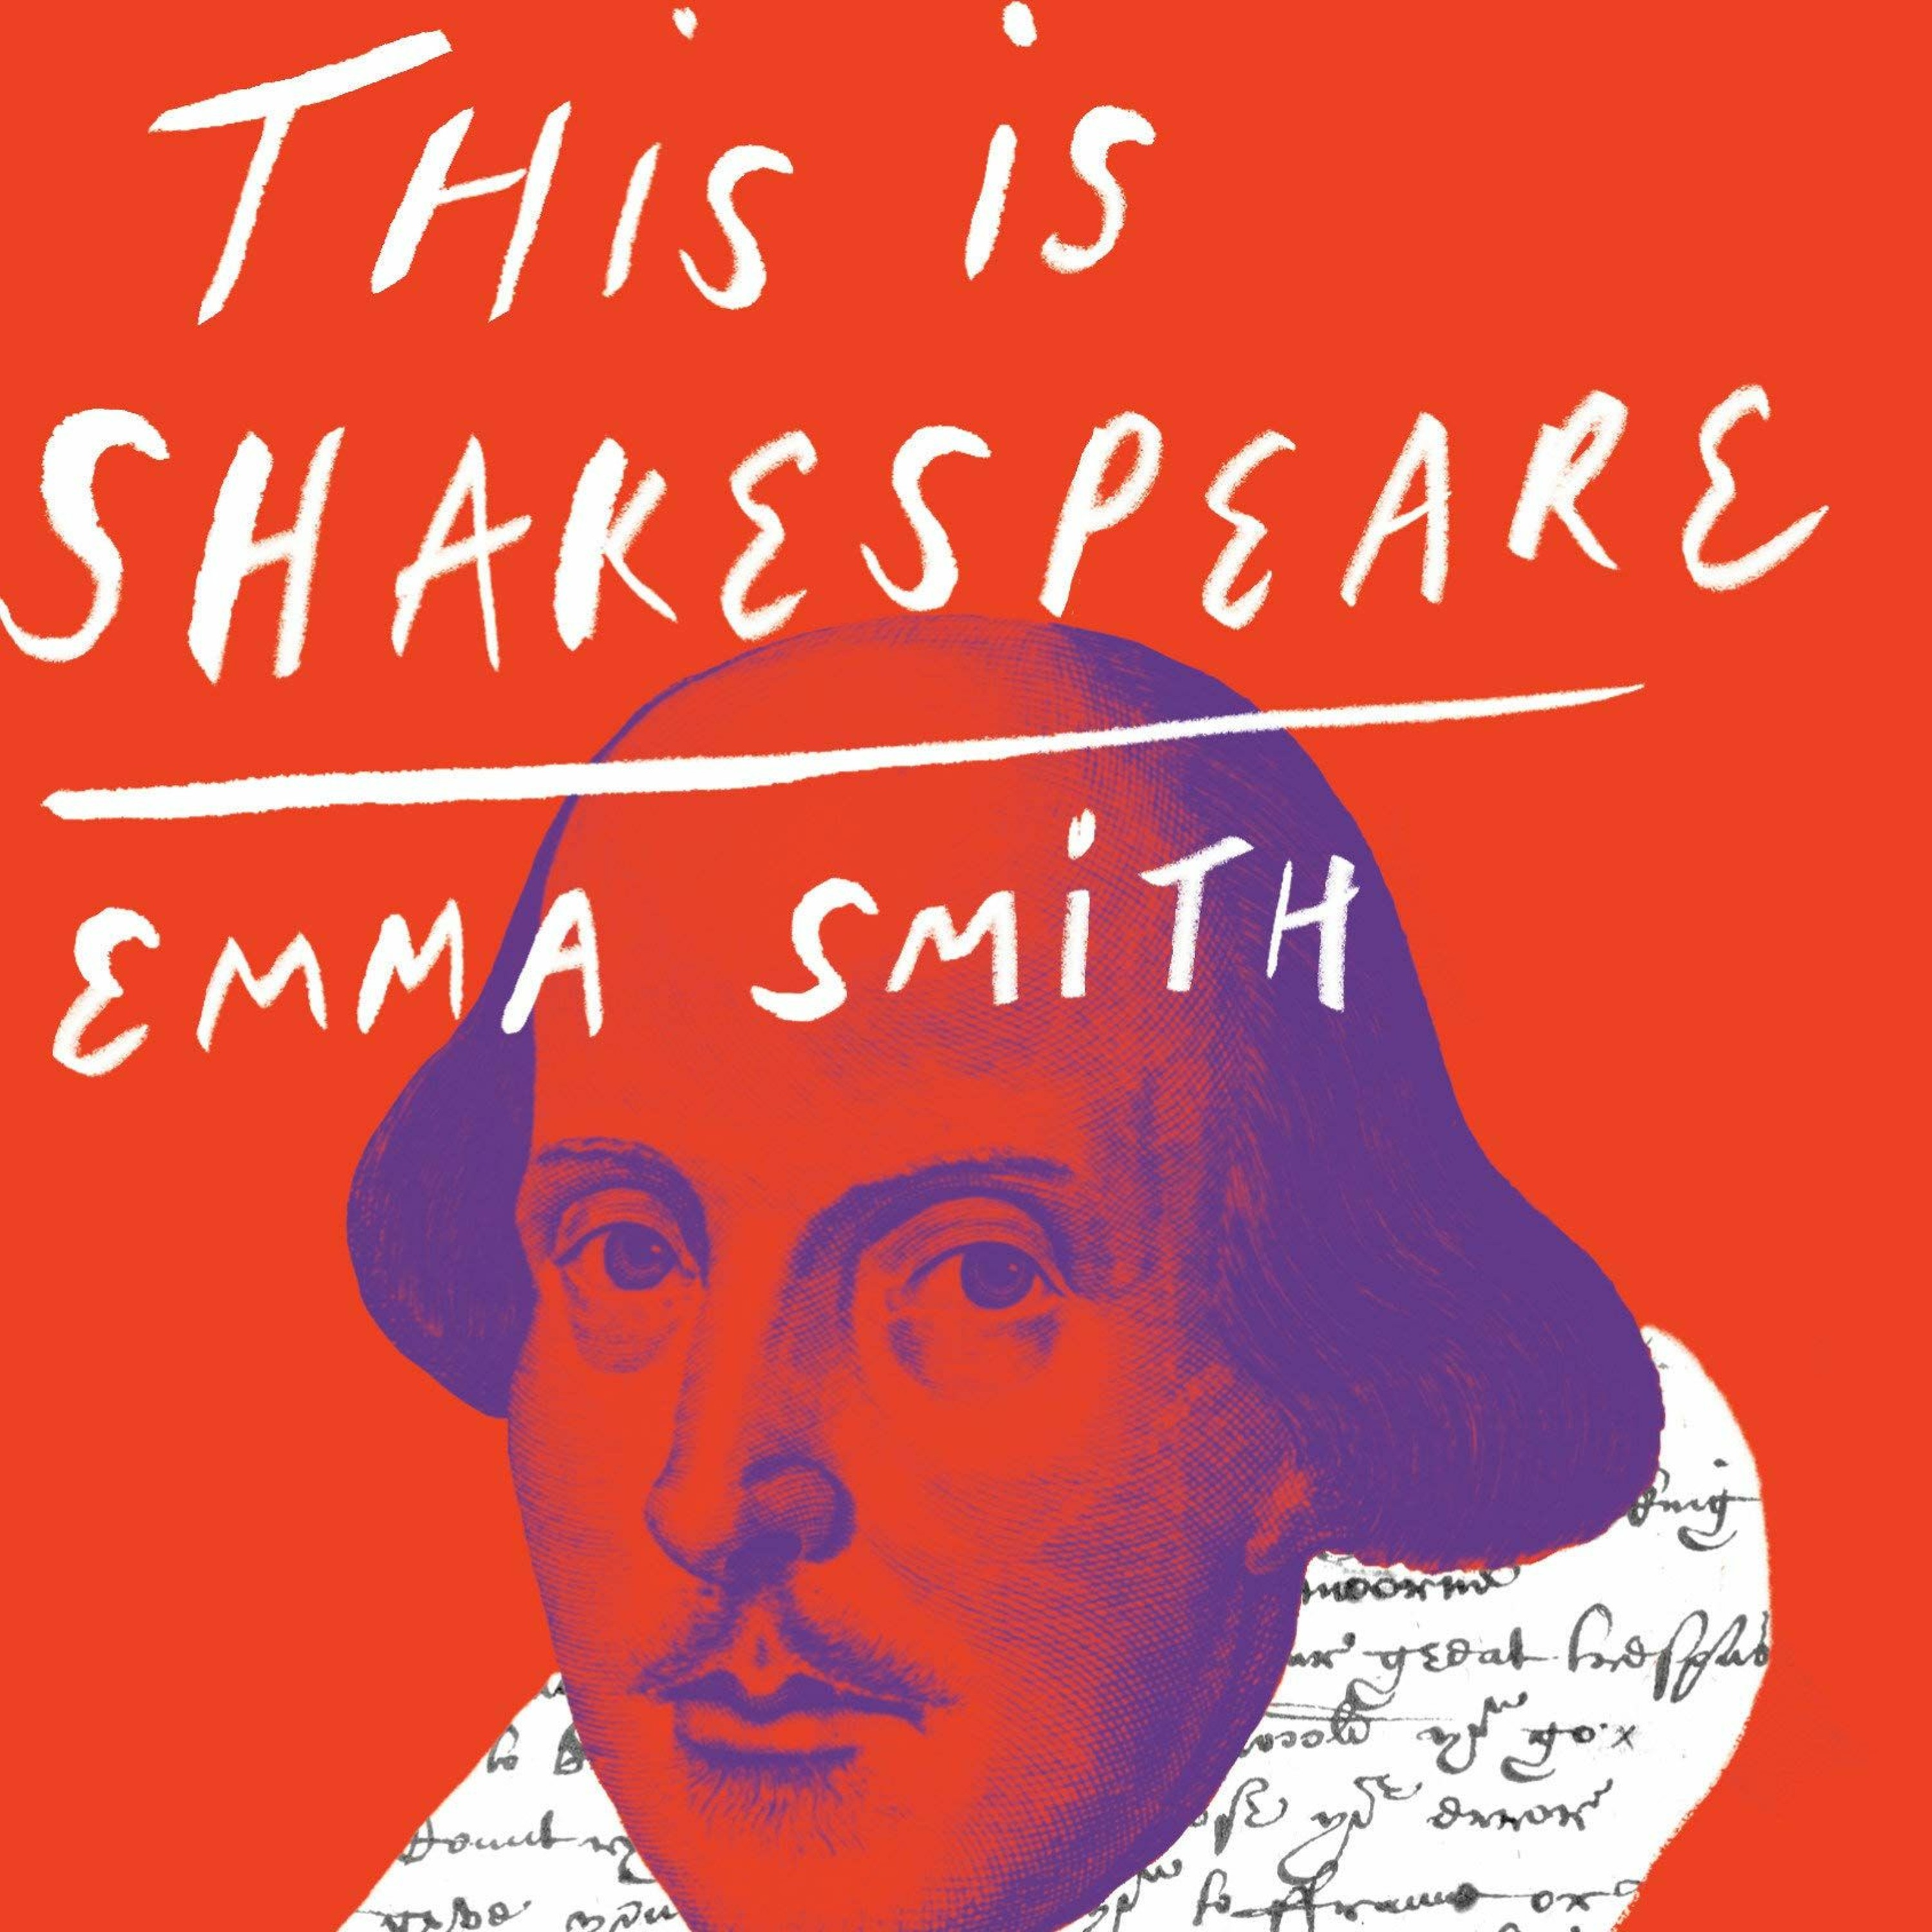 Emma Smith and Stephen Greenblatt, ”This is Shakespeare”